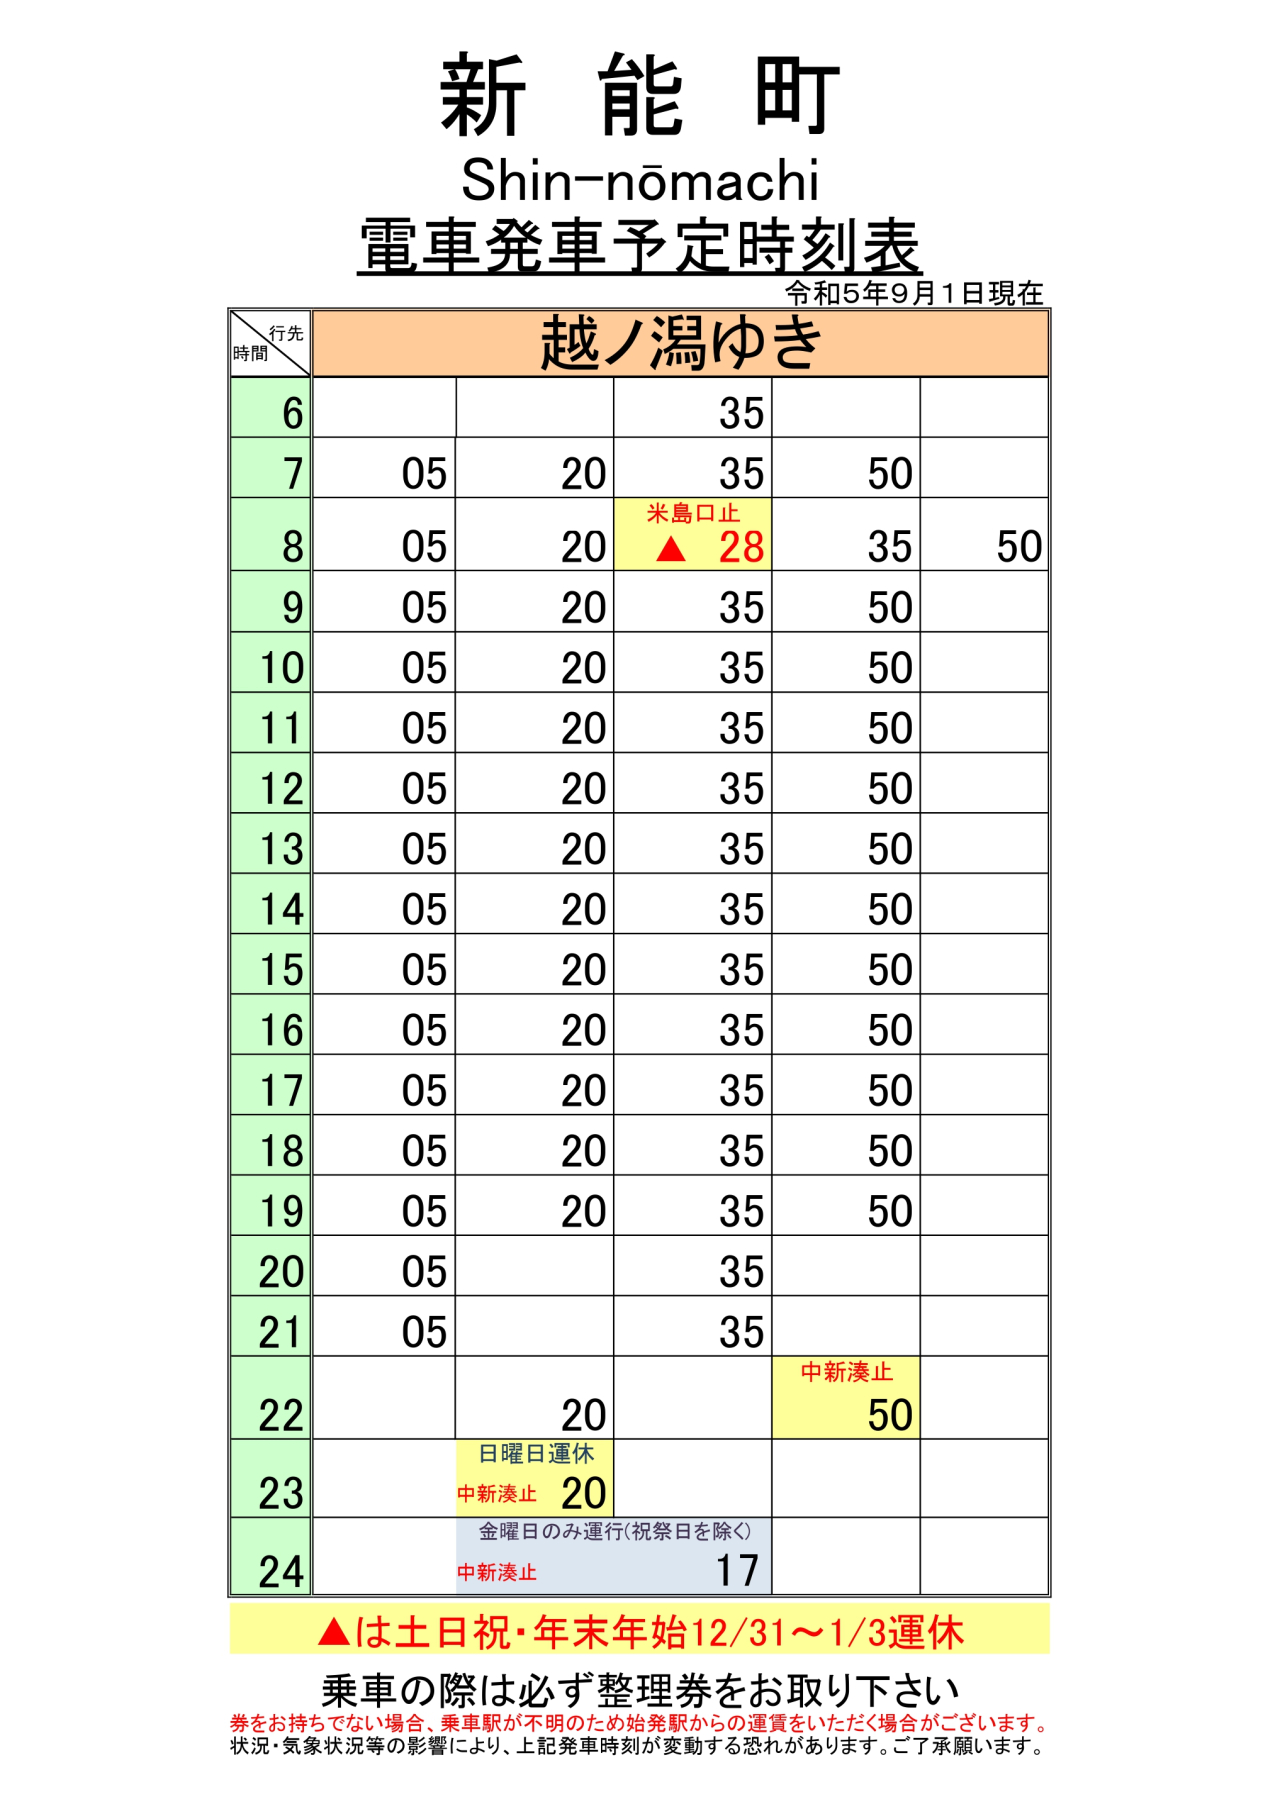 最新5.5.1改正各駅時刻表(新能町下り)_page-0001